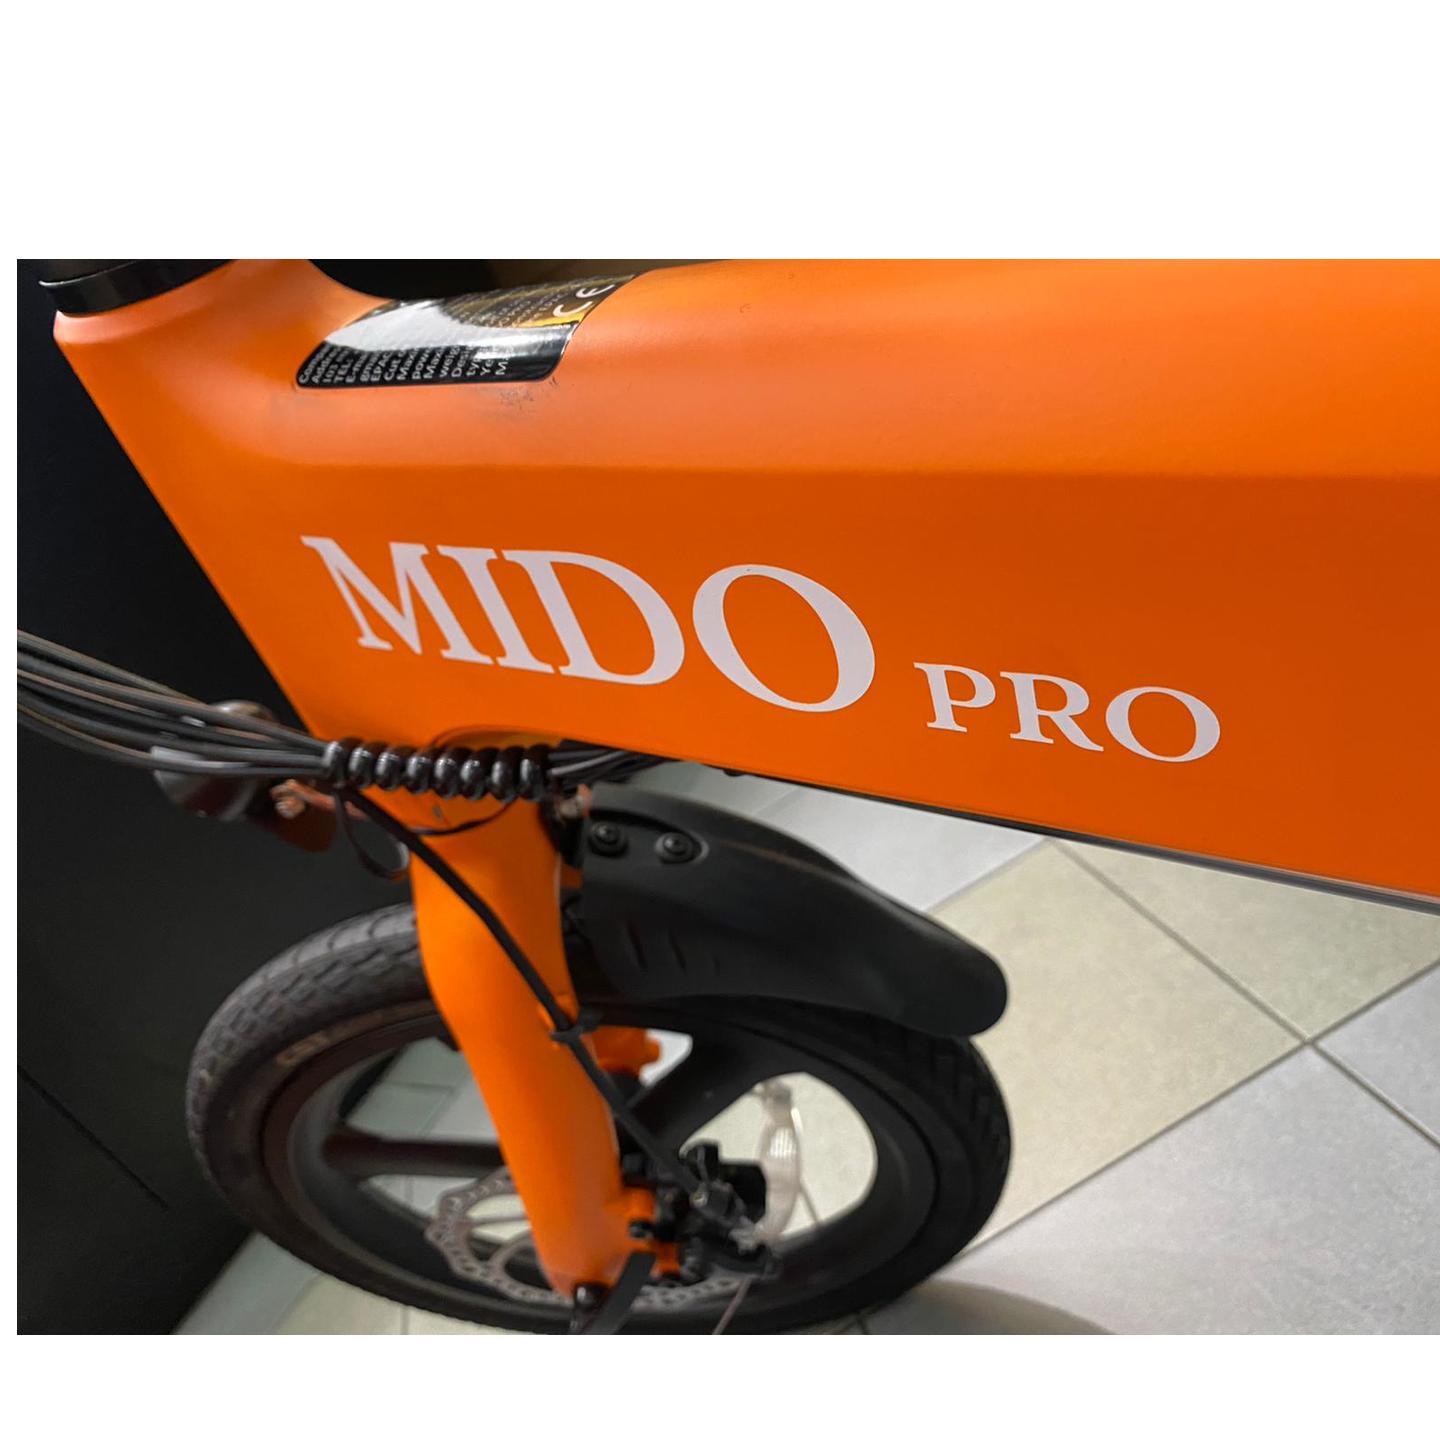 Mido Pro latest LTA approved PAB 